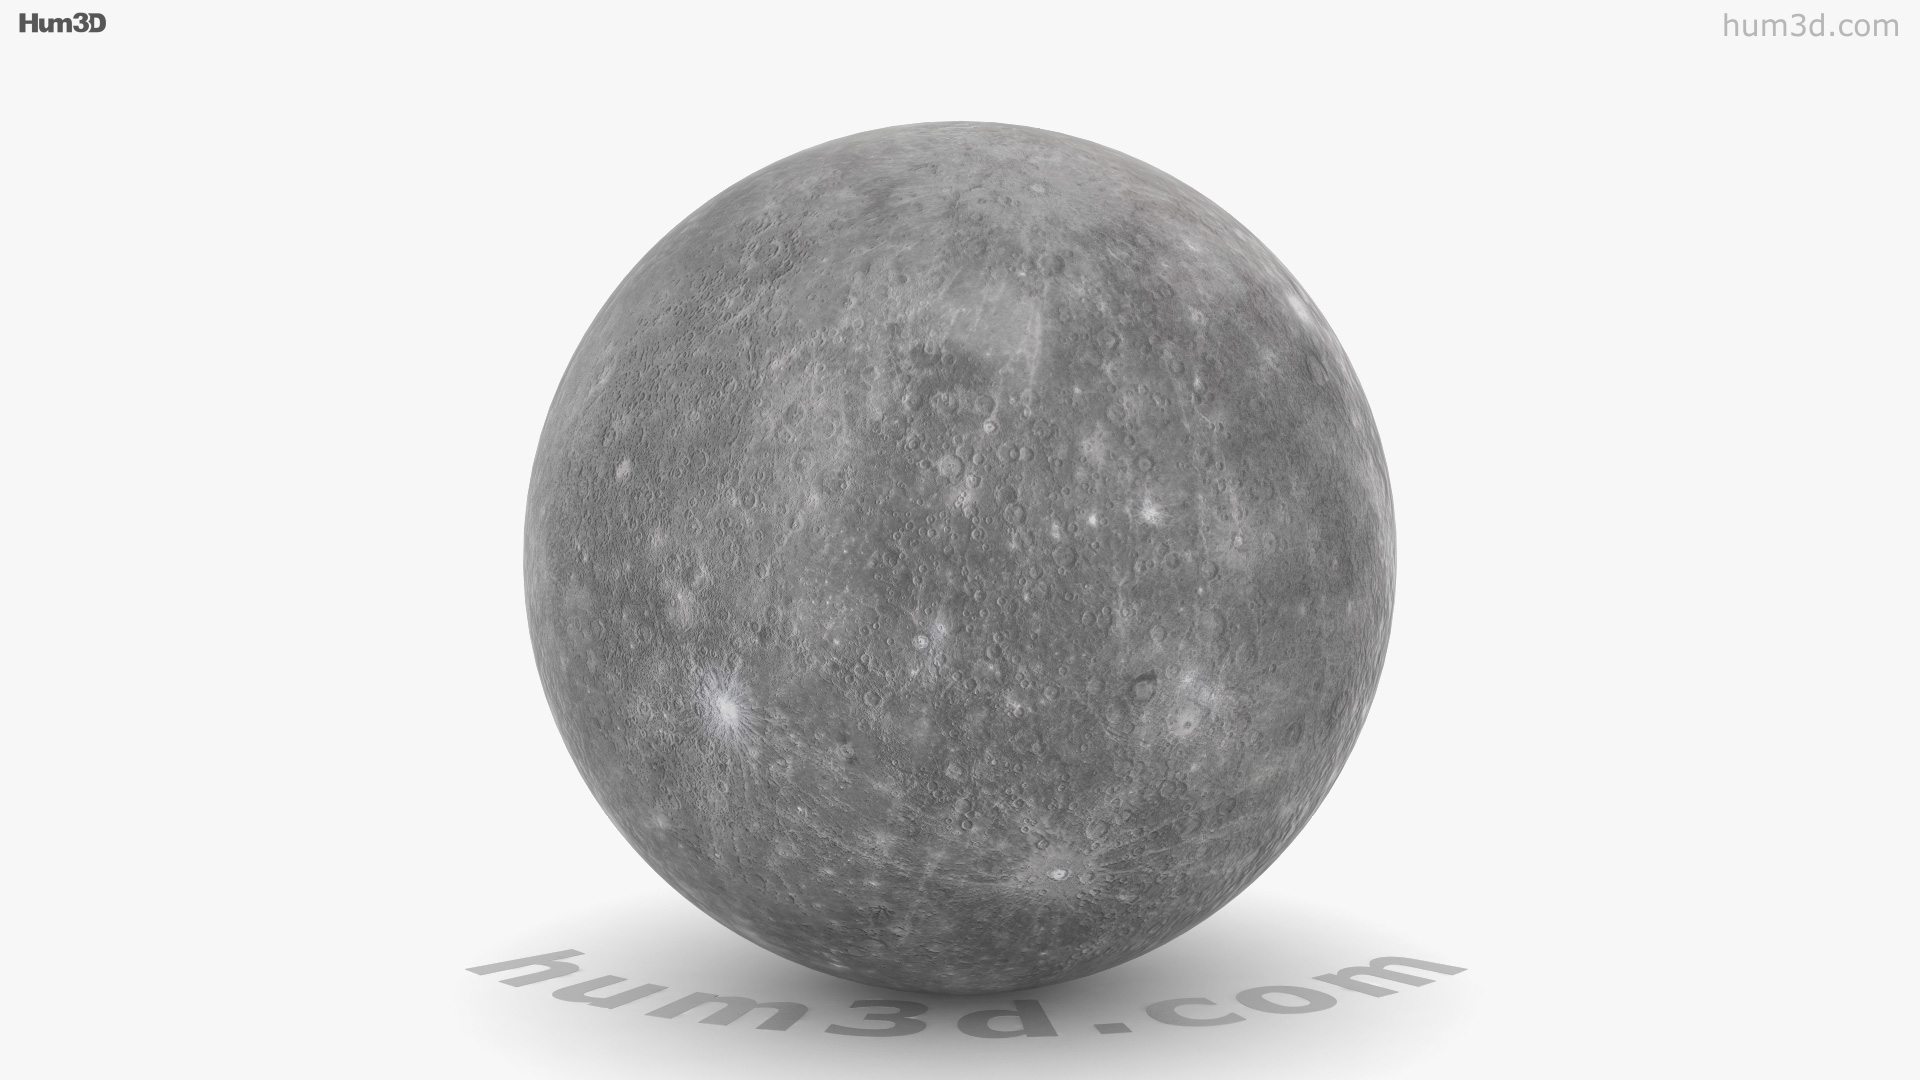 3d model of planet mercury